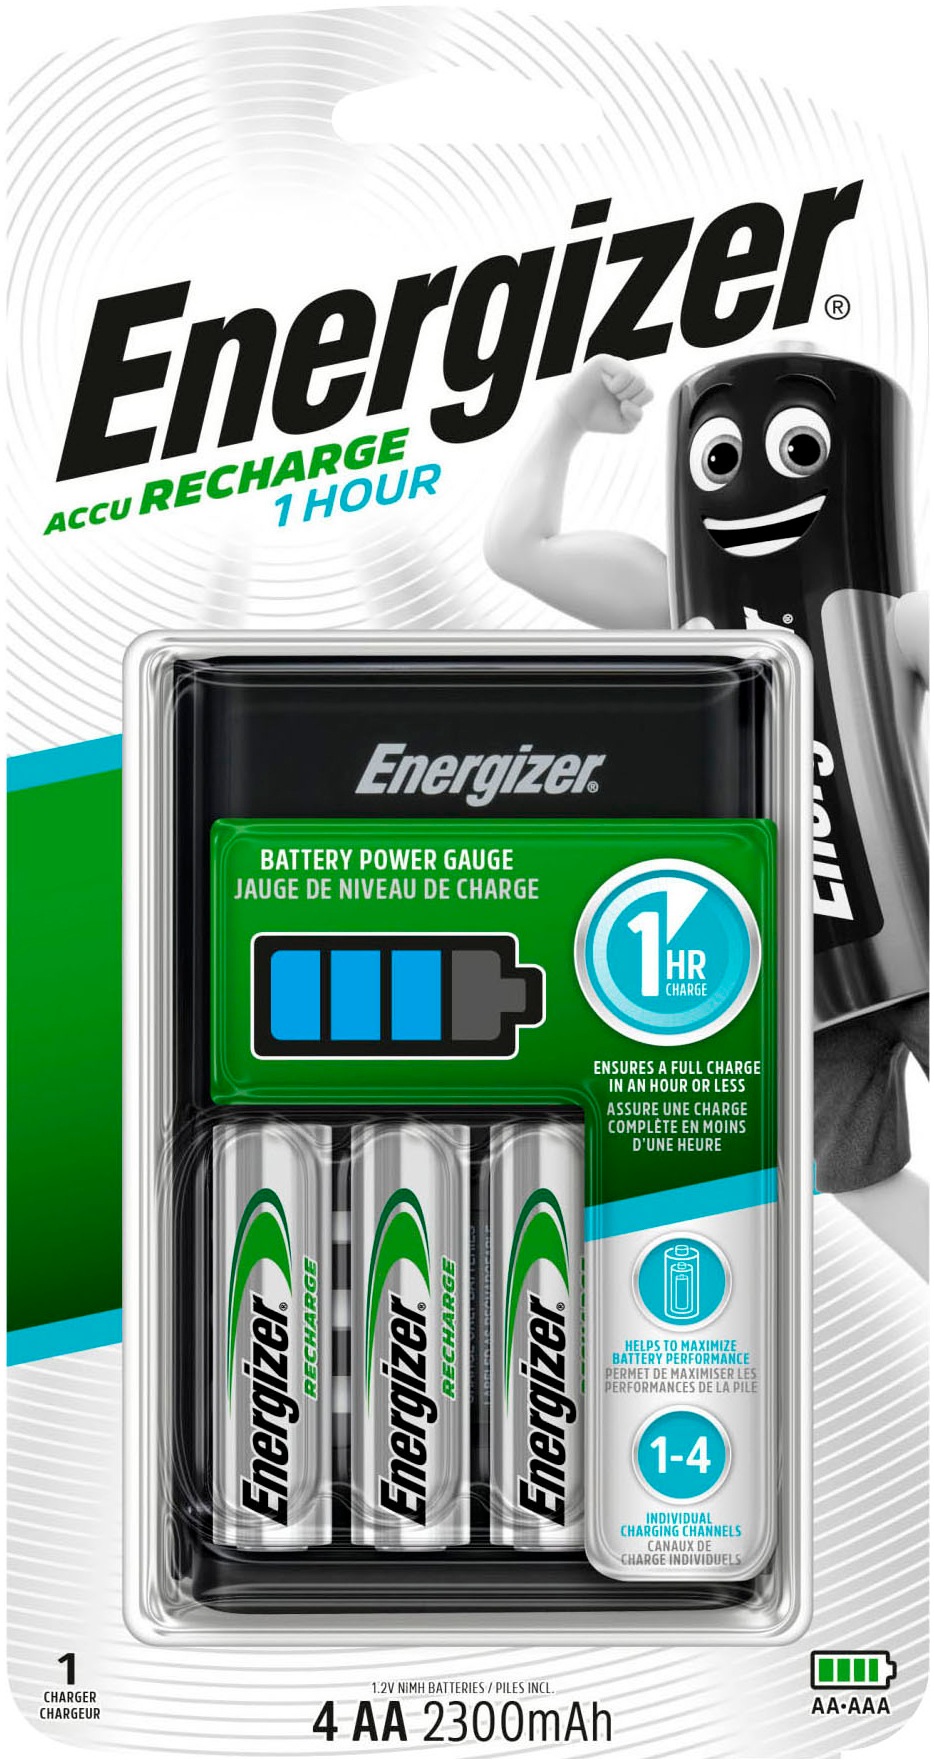 Energizer Batterie-Ladegerät »CH1HR3 1 Stunde«, 2500 mA